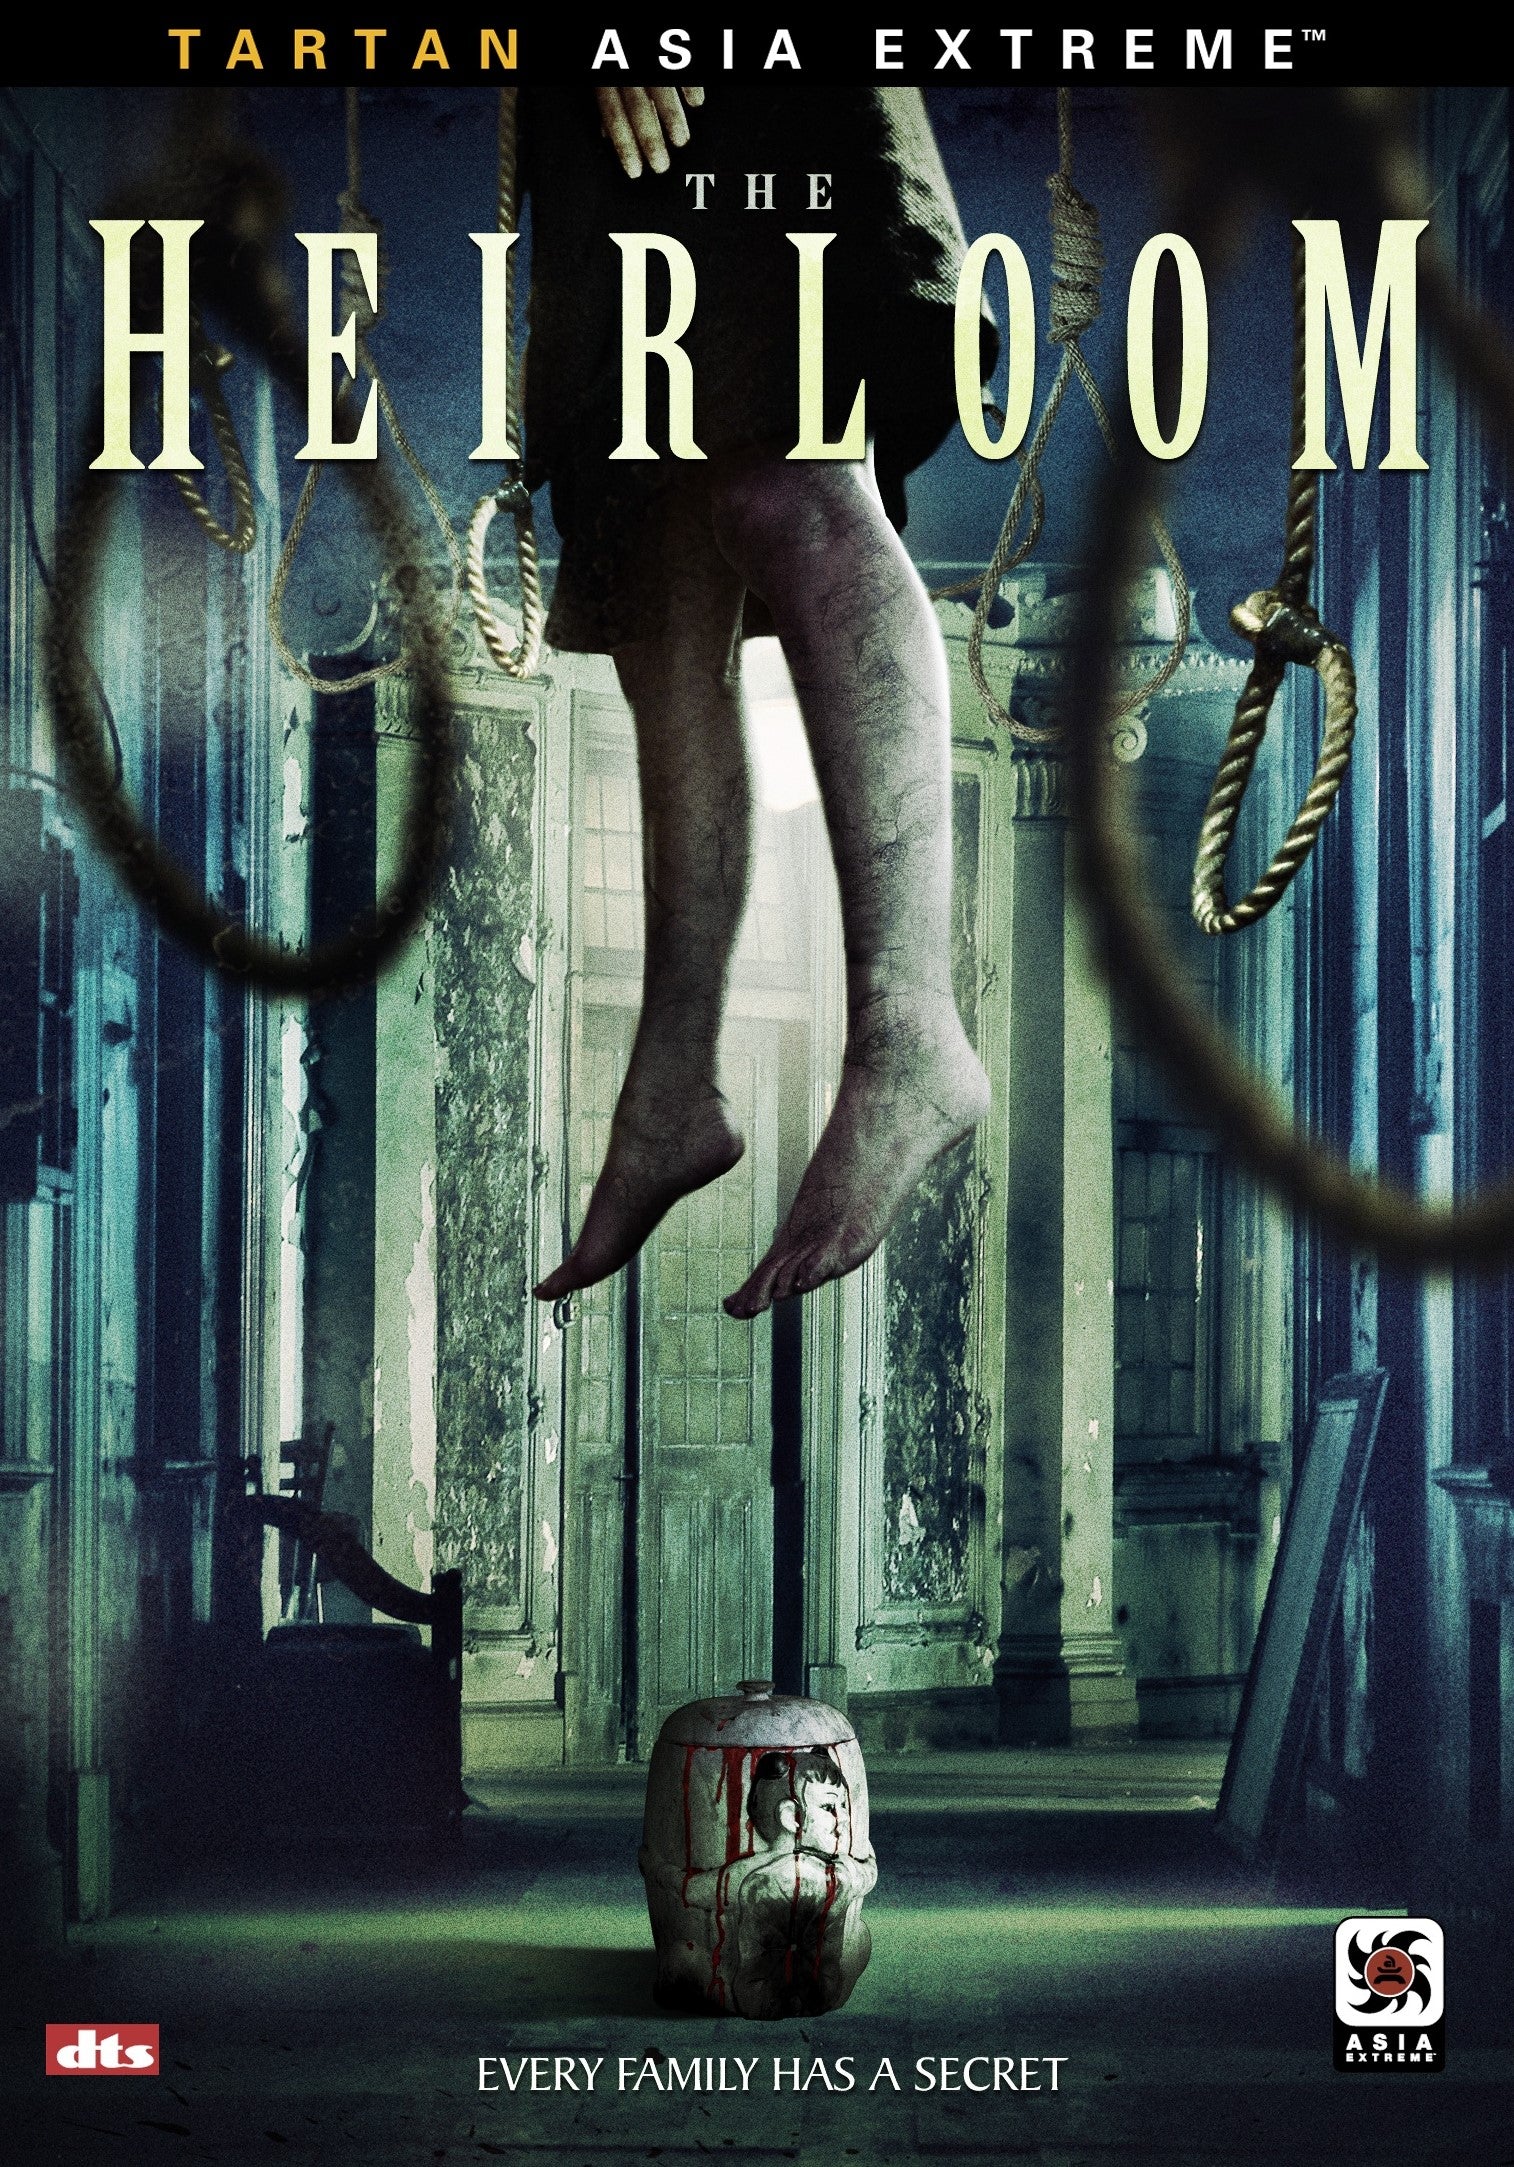 THE HEIRLOOM DVD